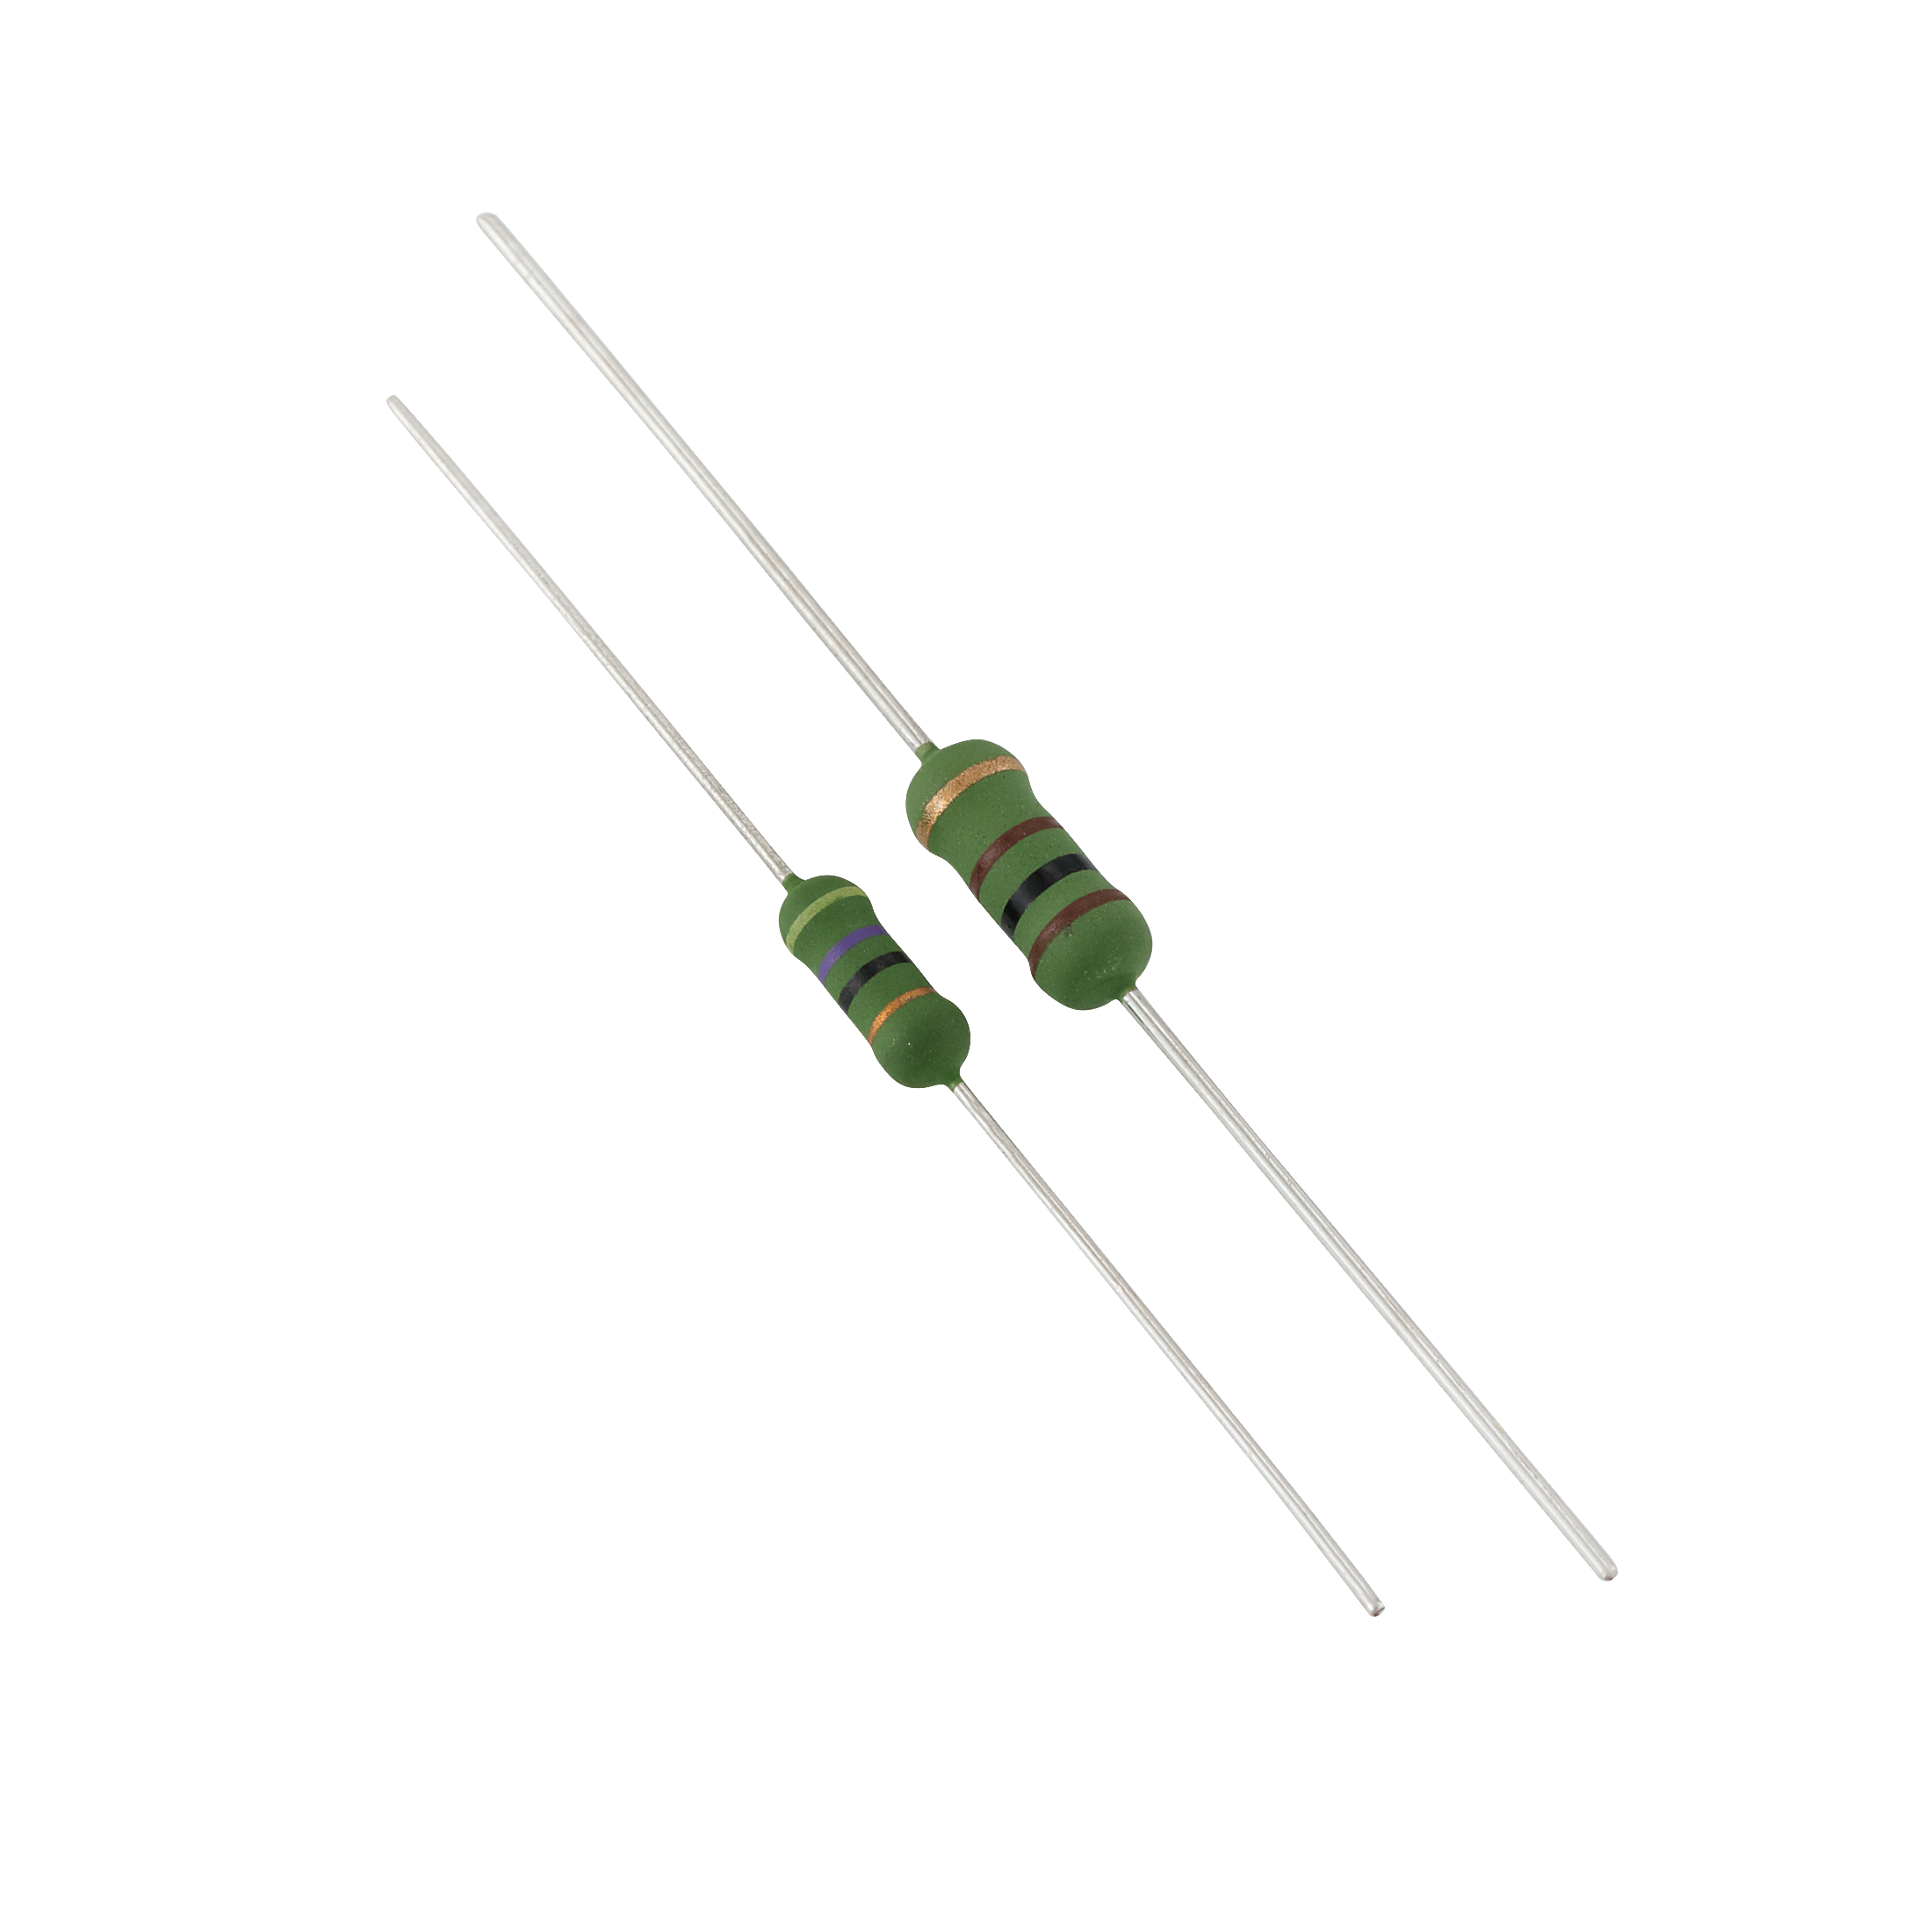 NPW-A 防爆型绕线电阻